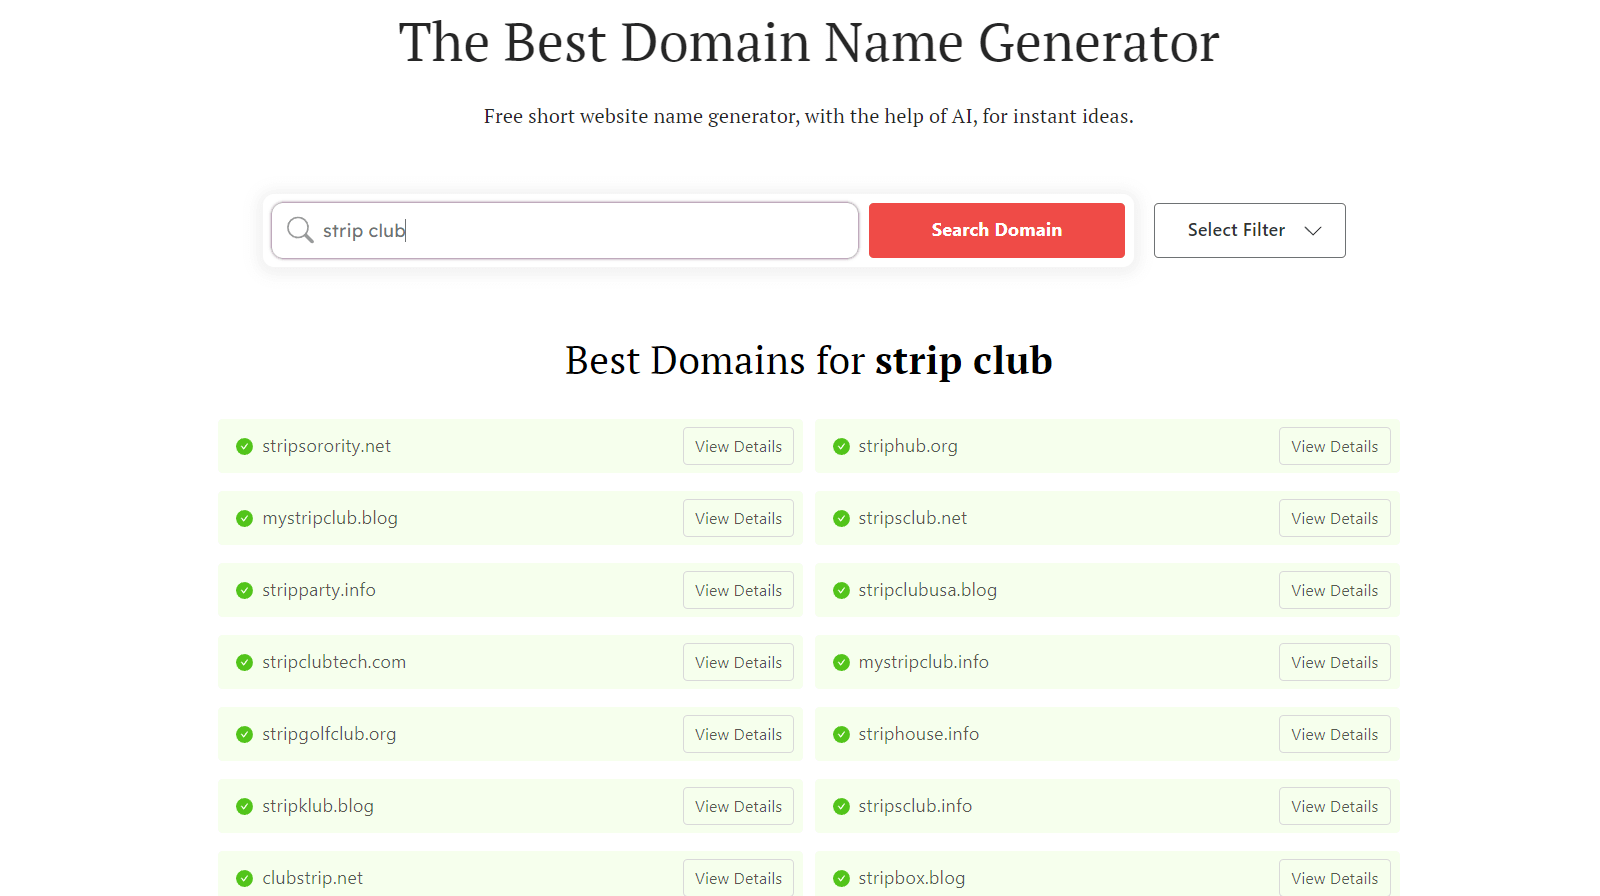 Strip club names from DomainWheel search